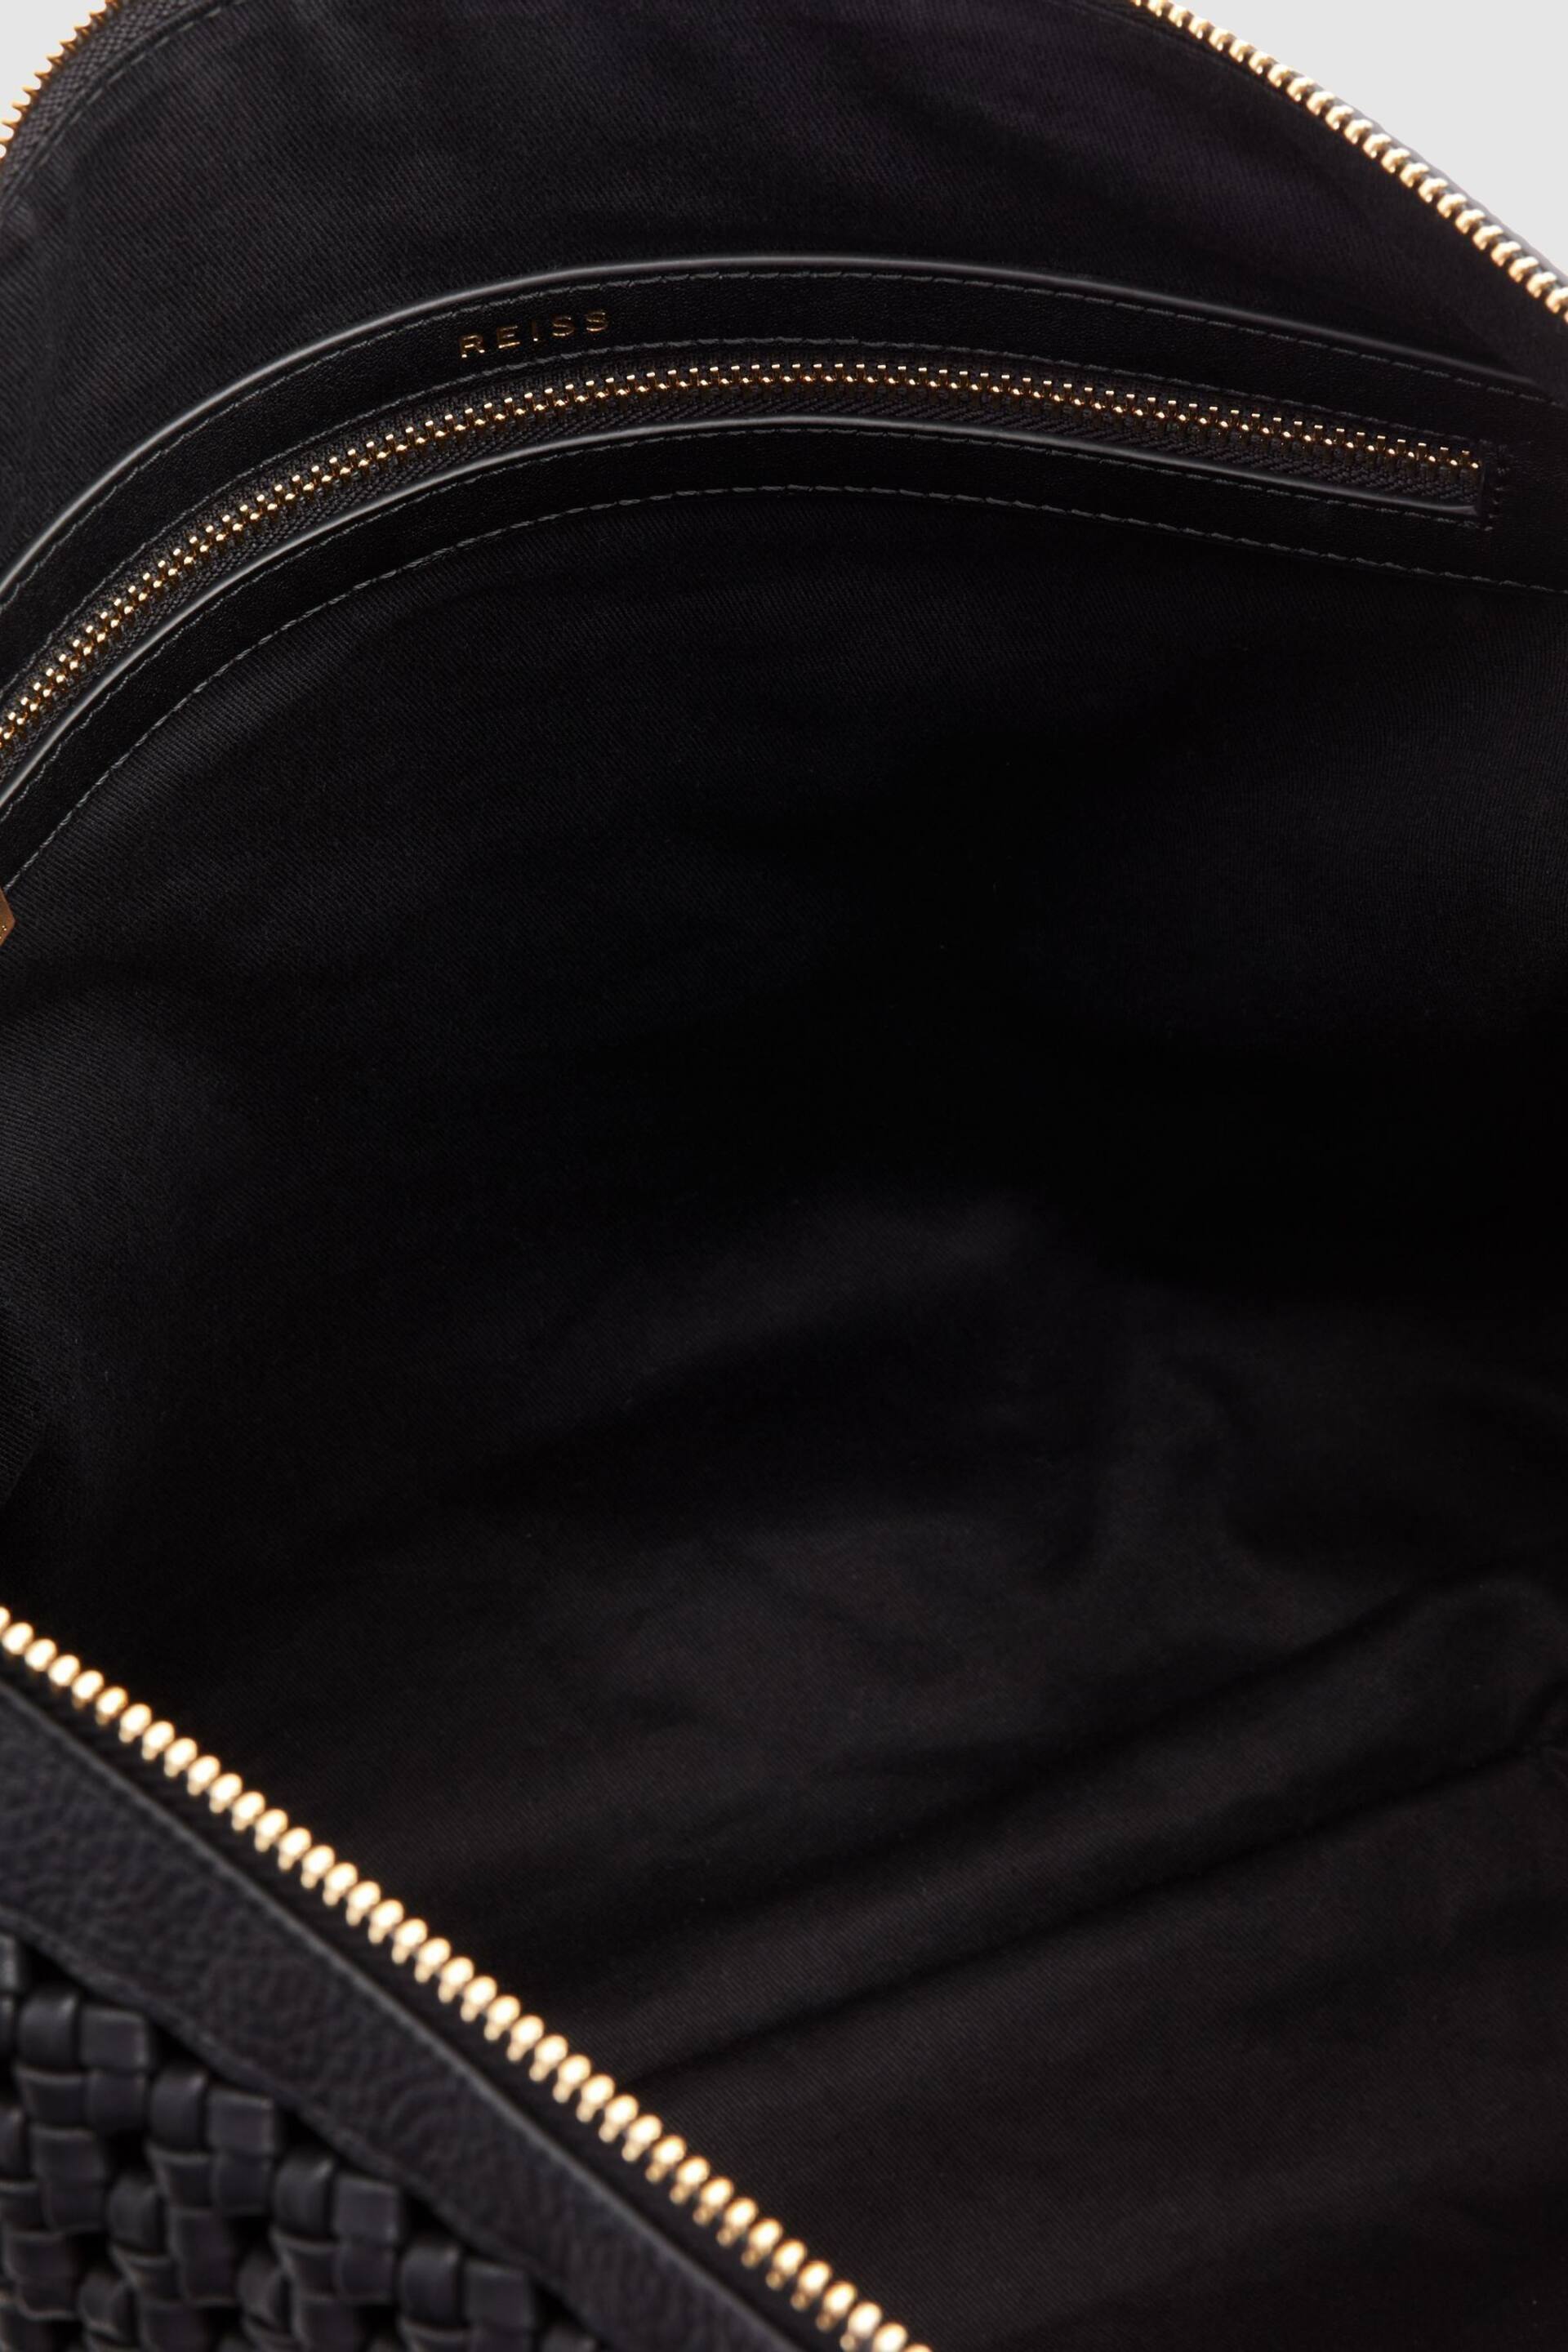 Reiss Black Vigo Leather Woven Tote Bag - Image 3 of 5